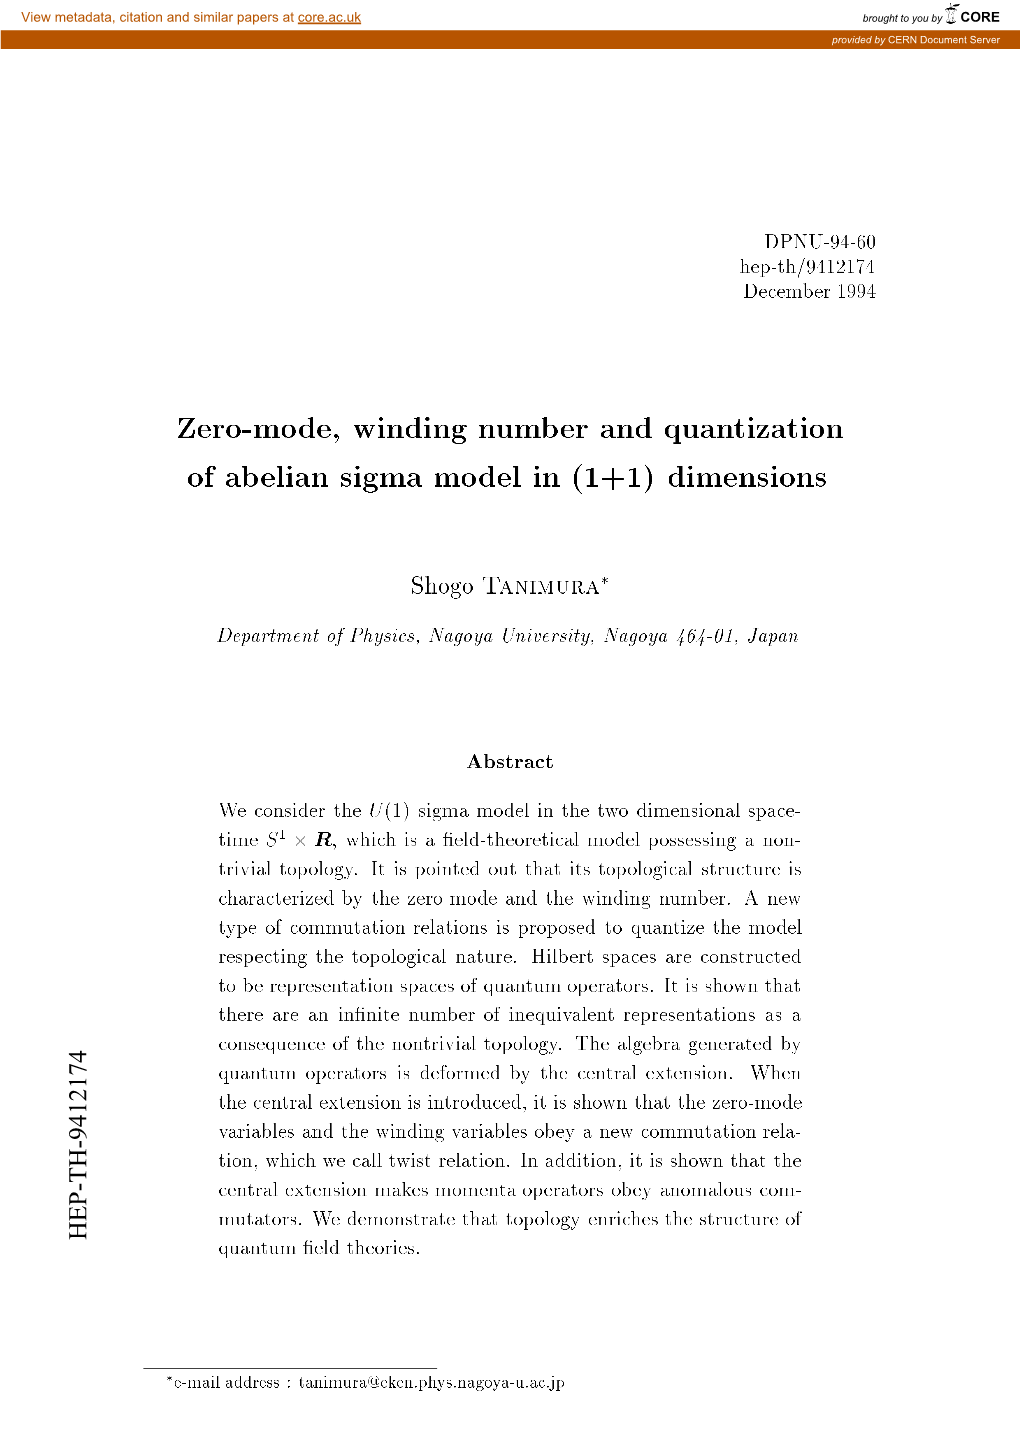 Zero-Mode, Winding Number and Quantization of Abelian Sigma